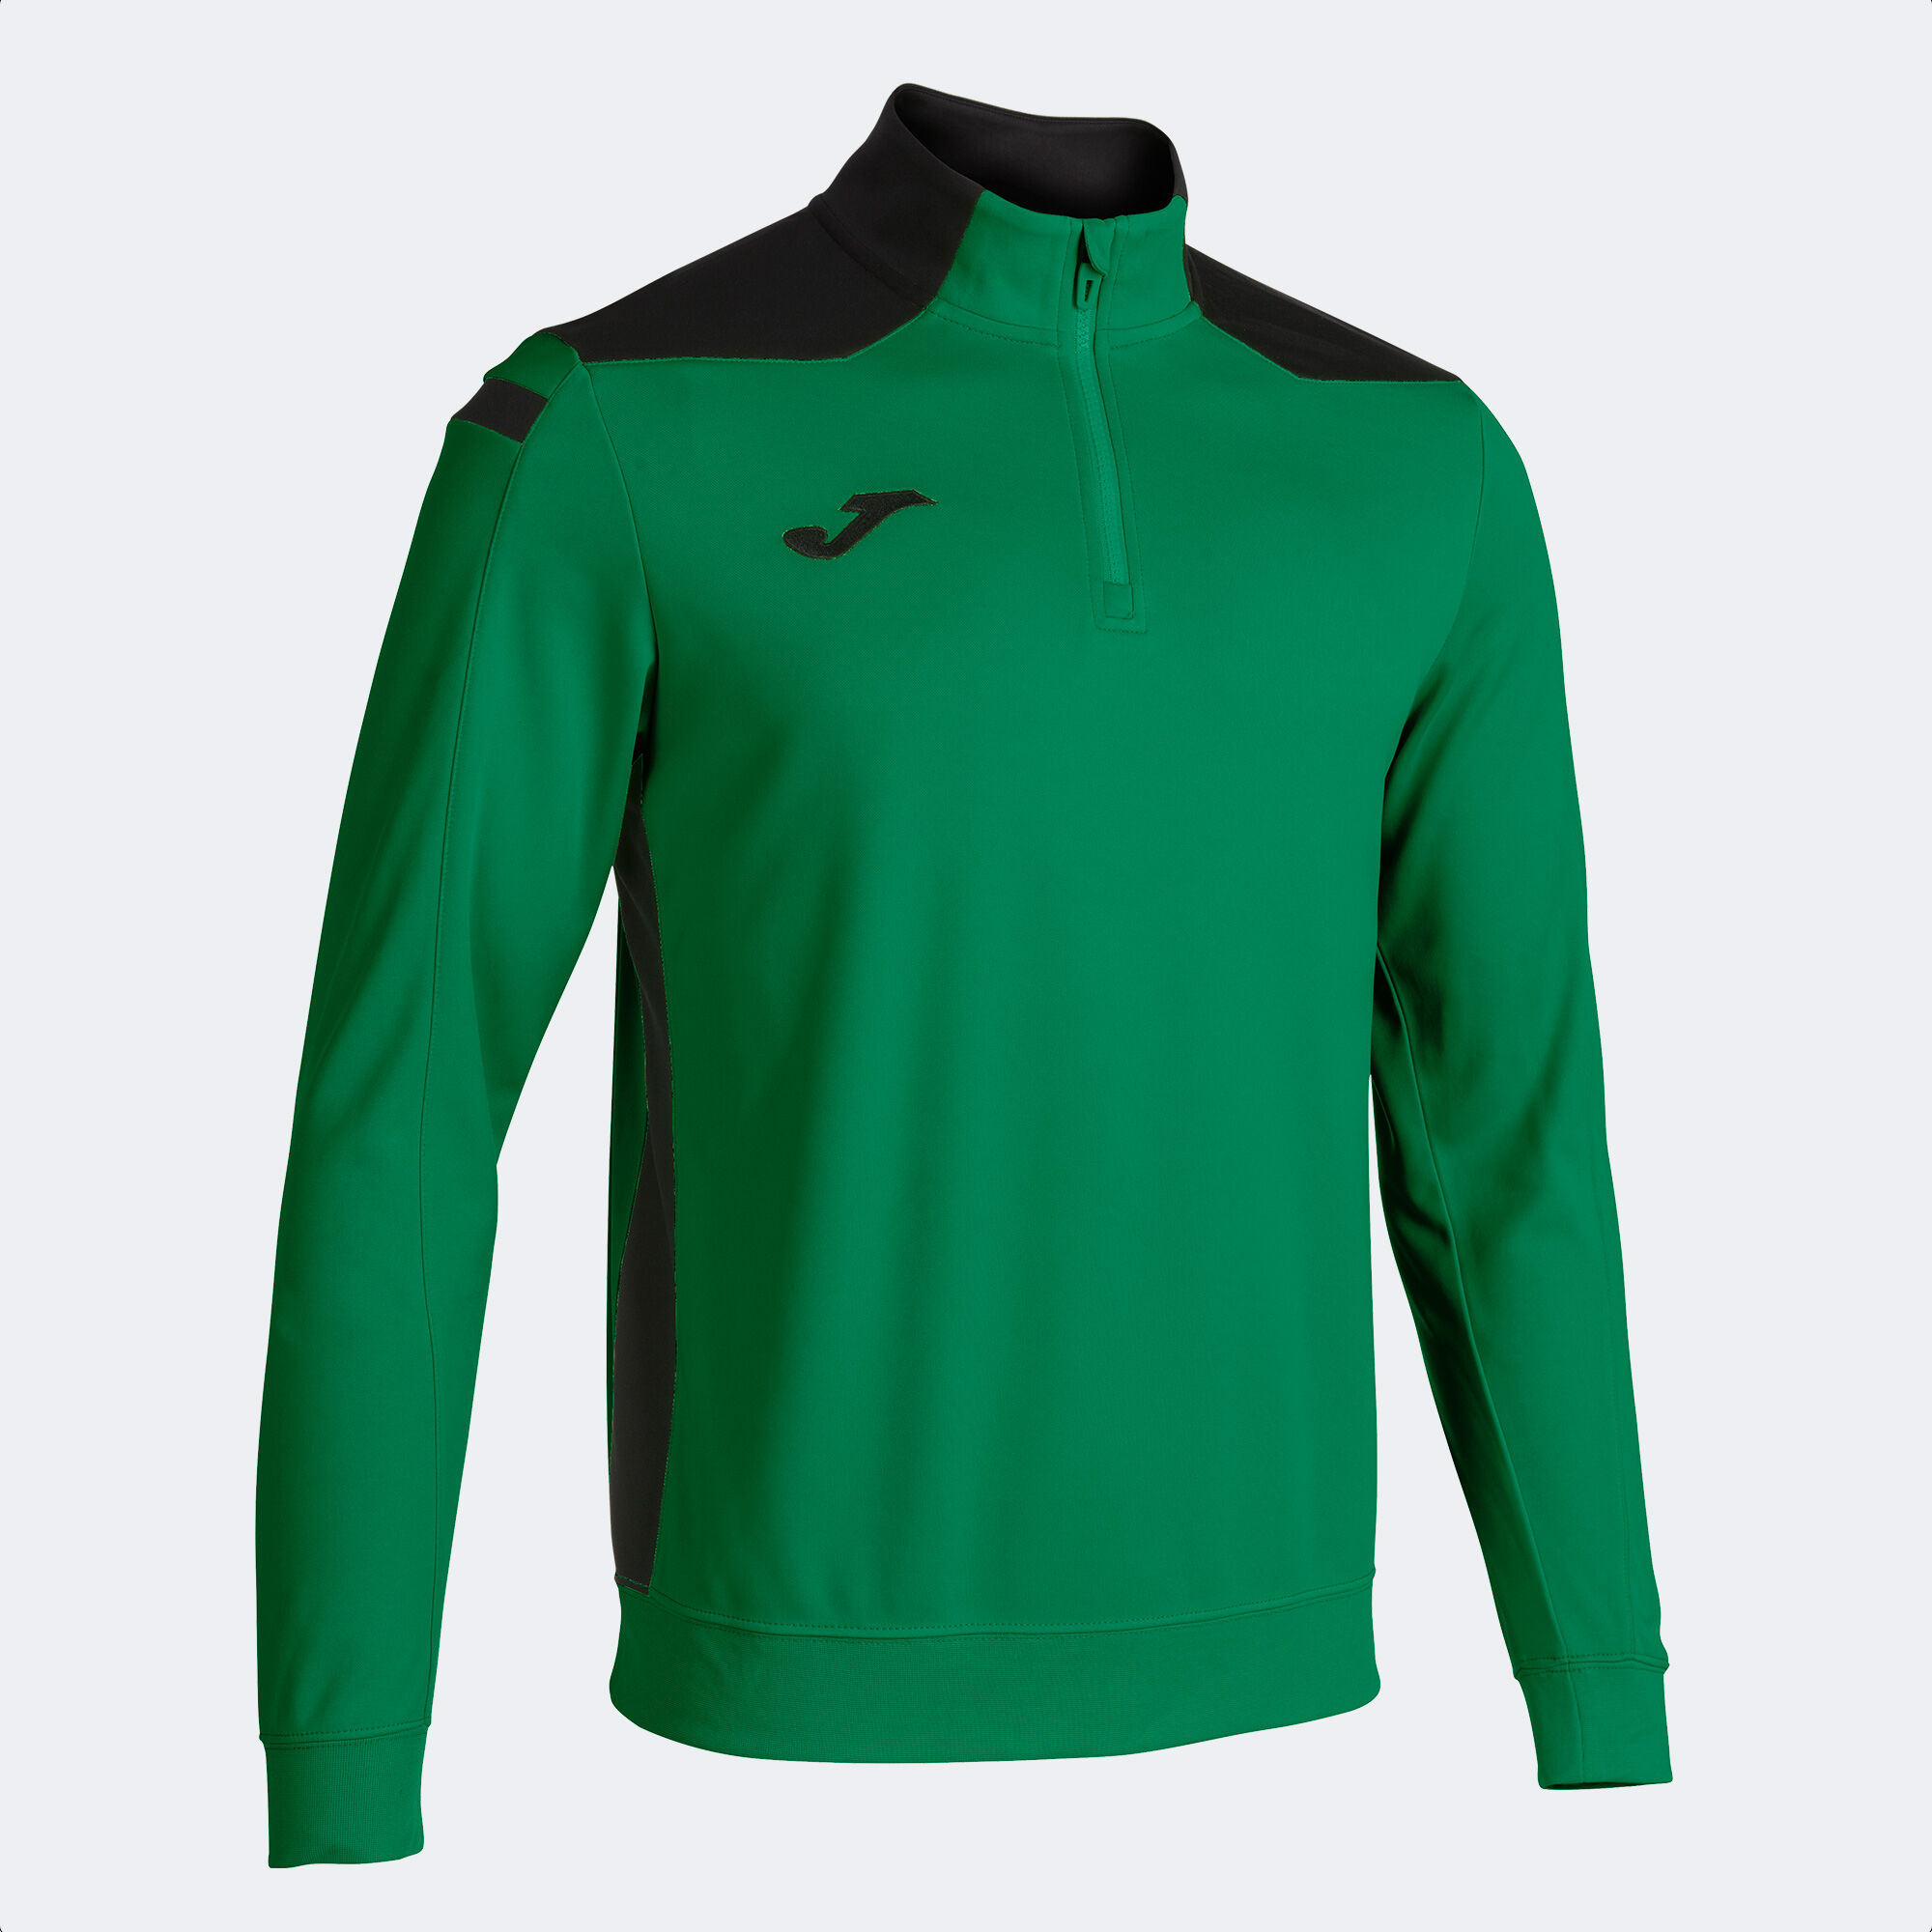 Sweat-shirt homme Championship VI vert noir